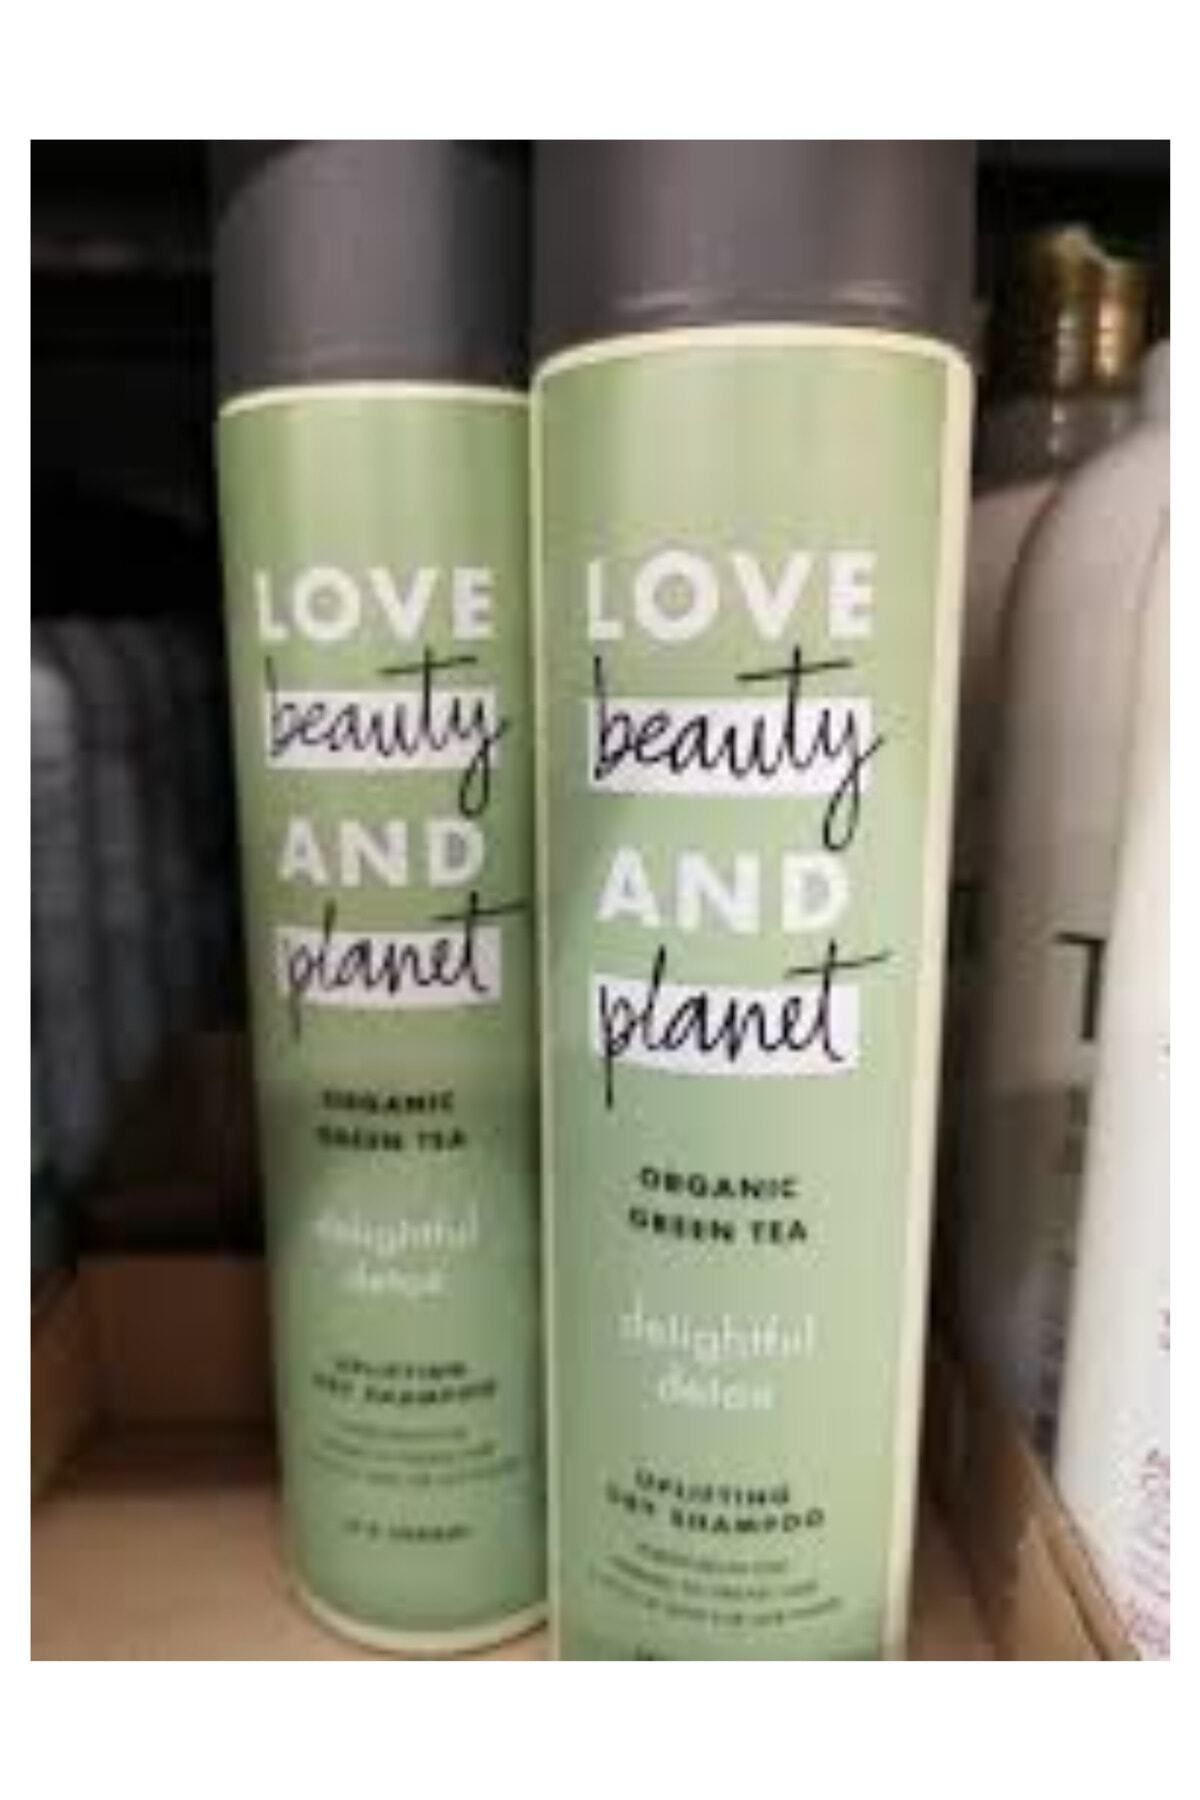 NIVEA Love Beauty and Planet Green Tea Detox Kuru Şampuan 245 ml 2 Adet.